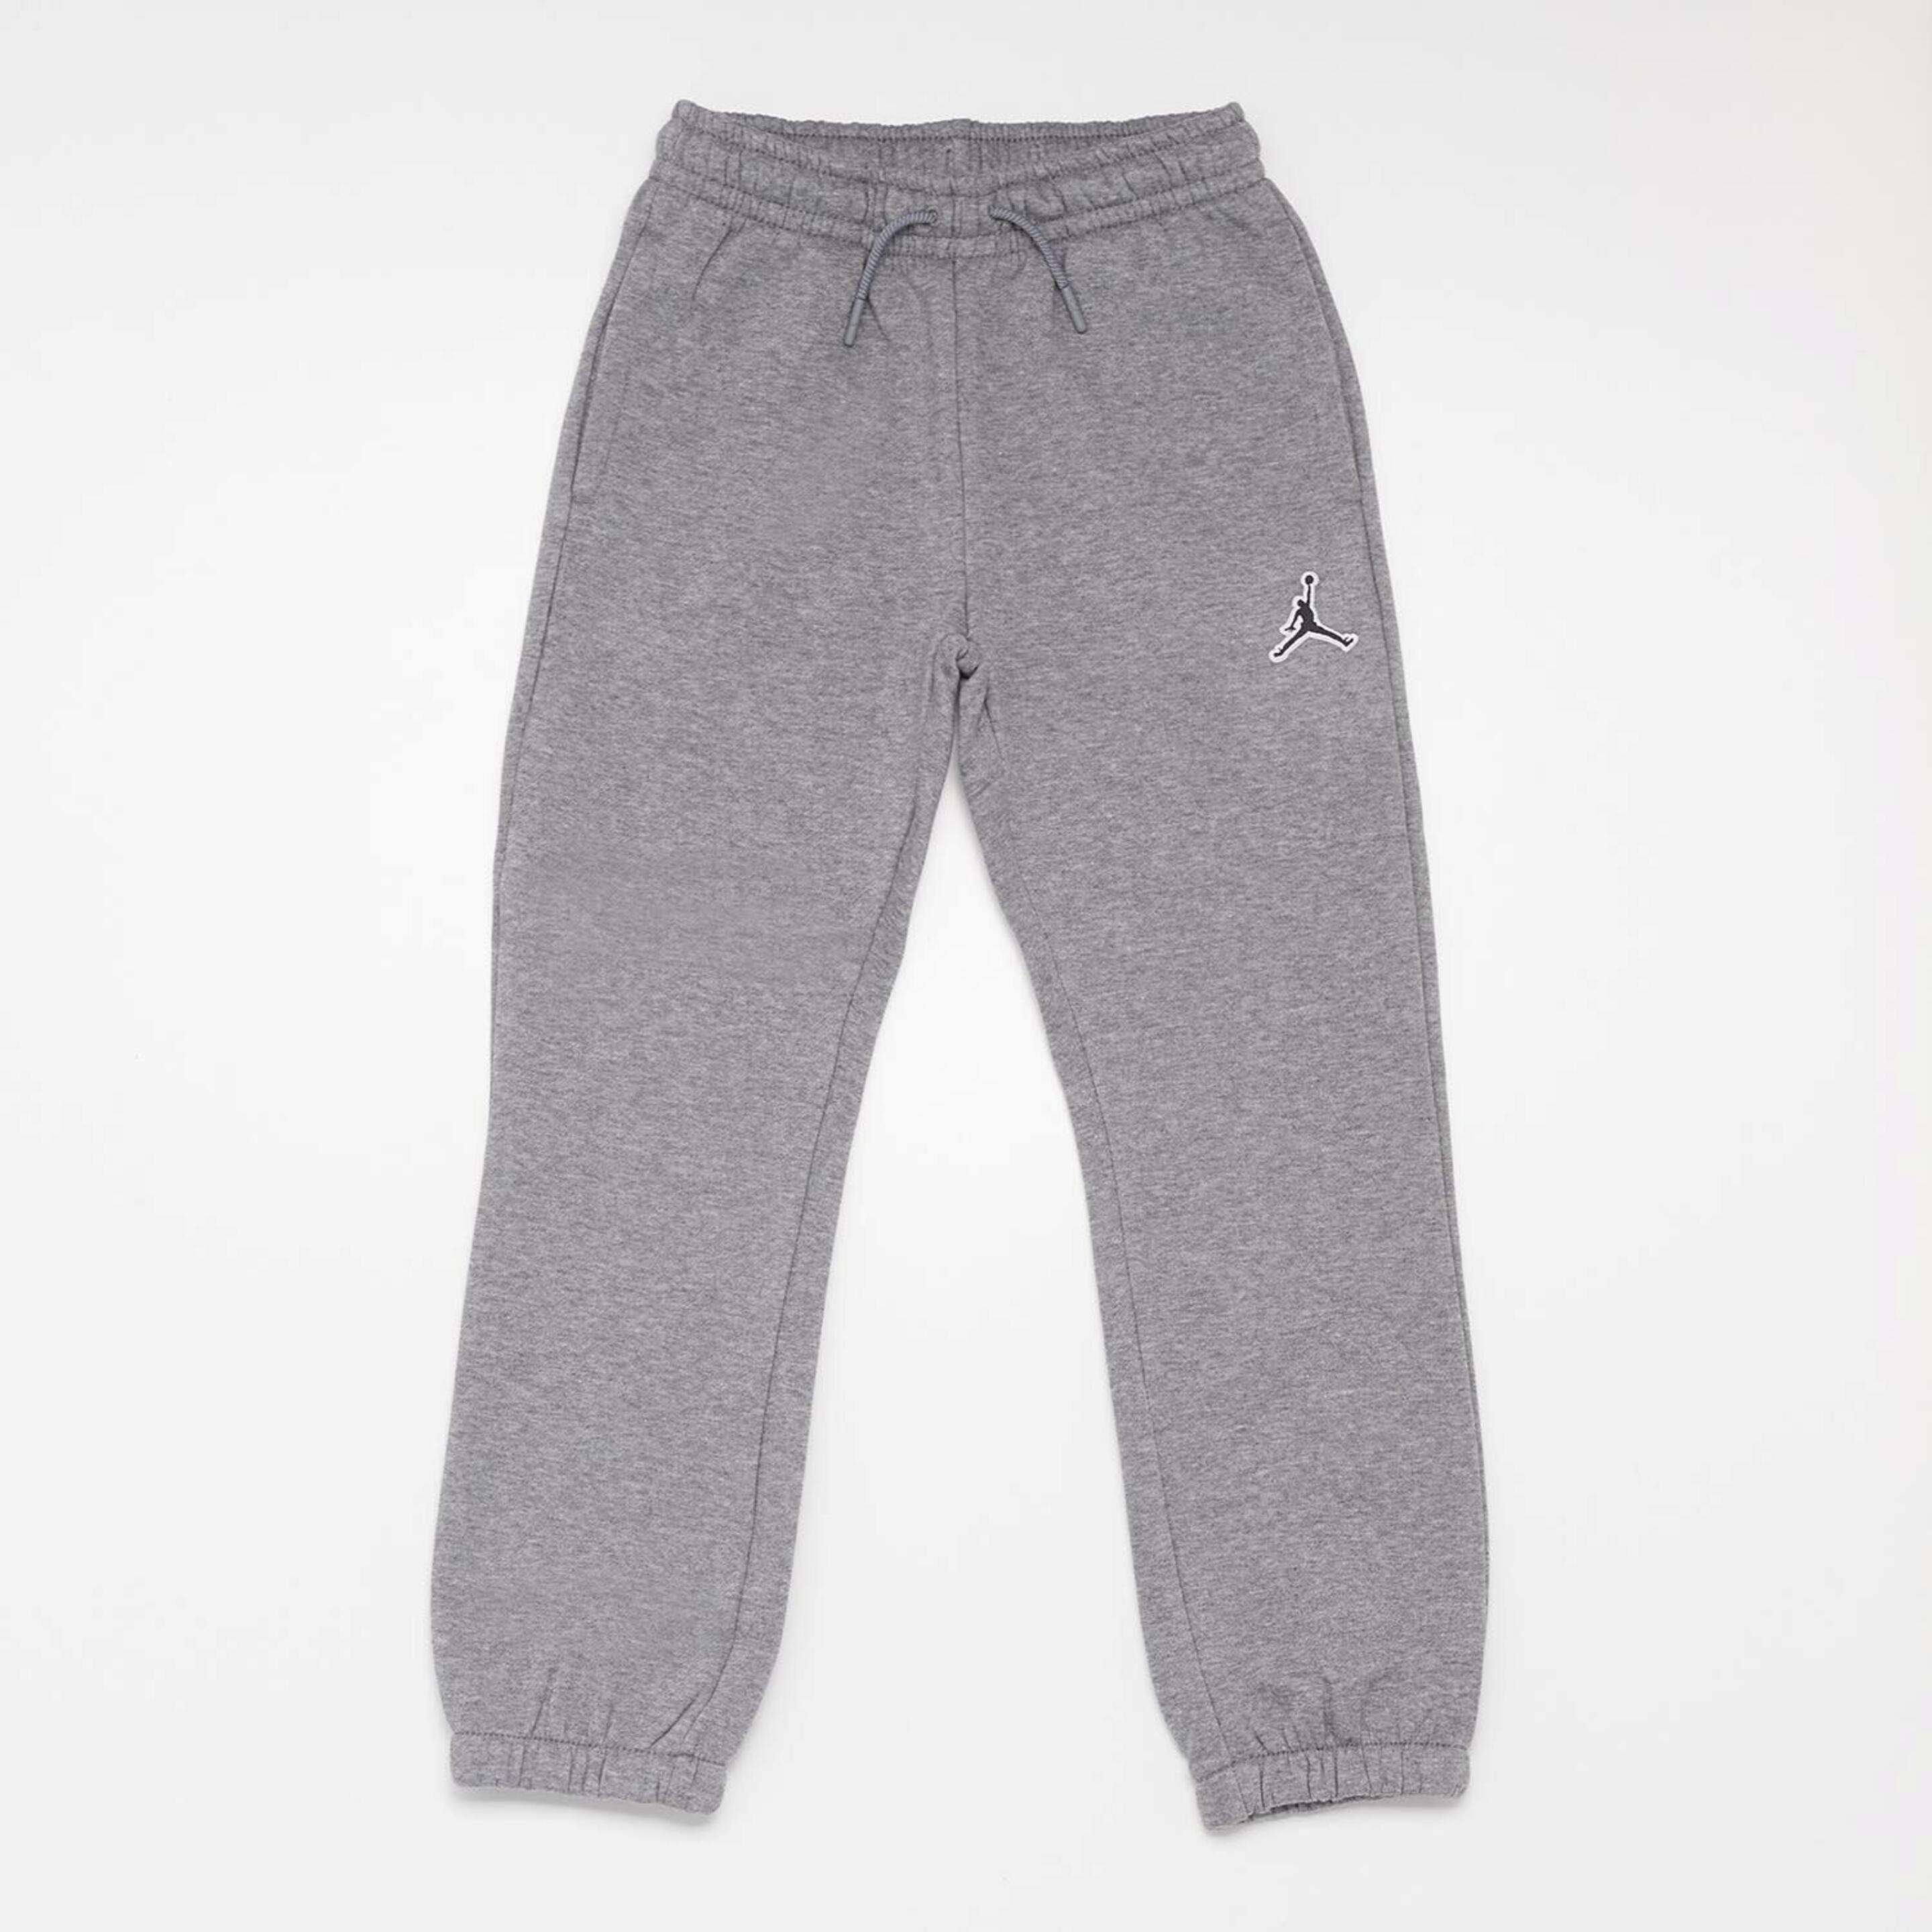 Pantalón Nike - gris - Pantalón Niño